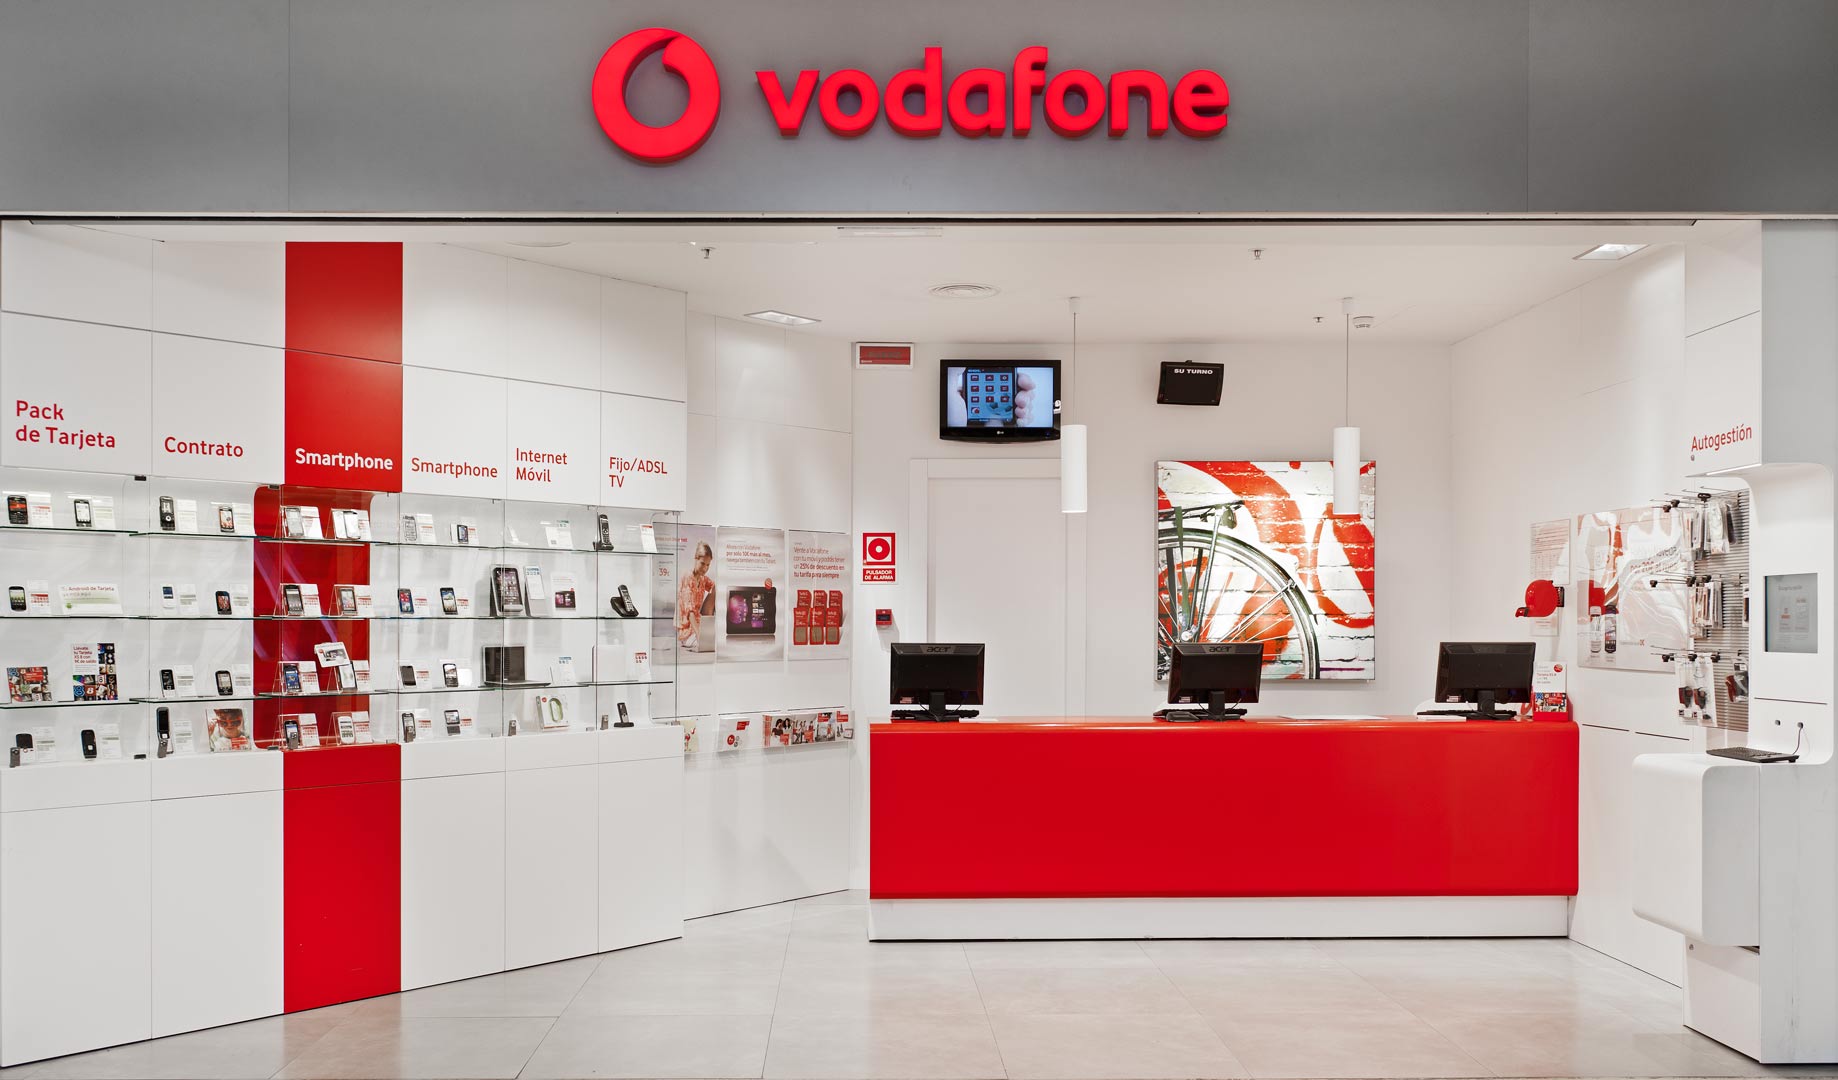 Vodafone | Proyectos Agomadera | Ebanisteria | Madera | Constuccion | Decoracion | Reforma Integral | Mobiliario A Medida | Arquitectura Corporativa